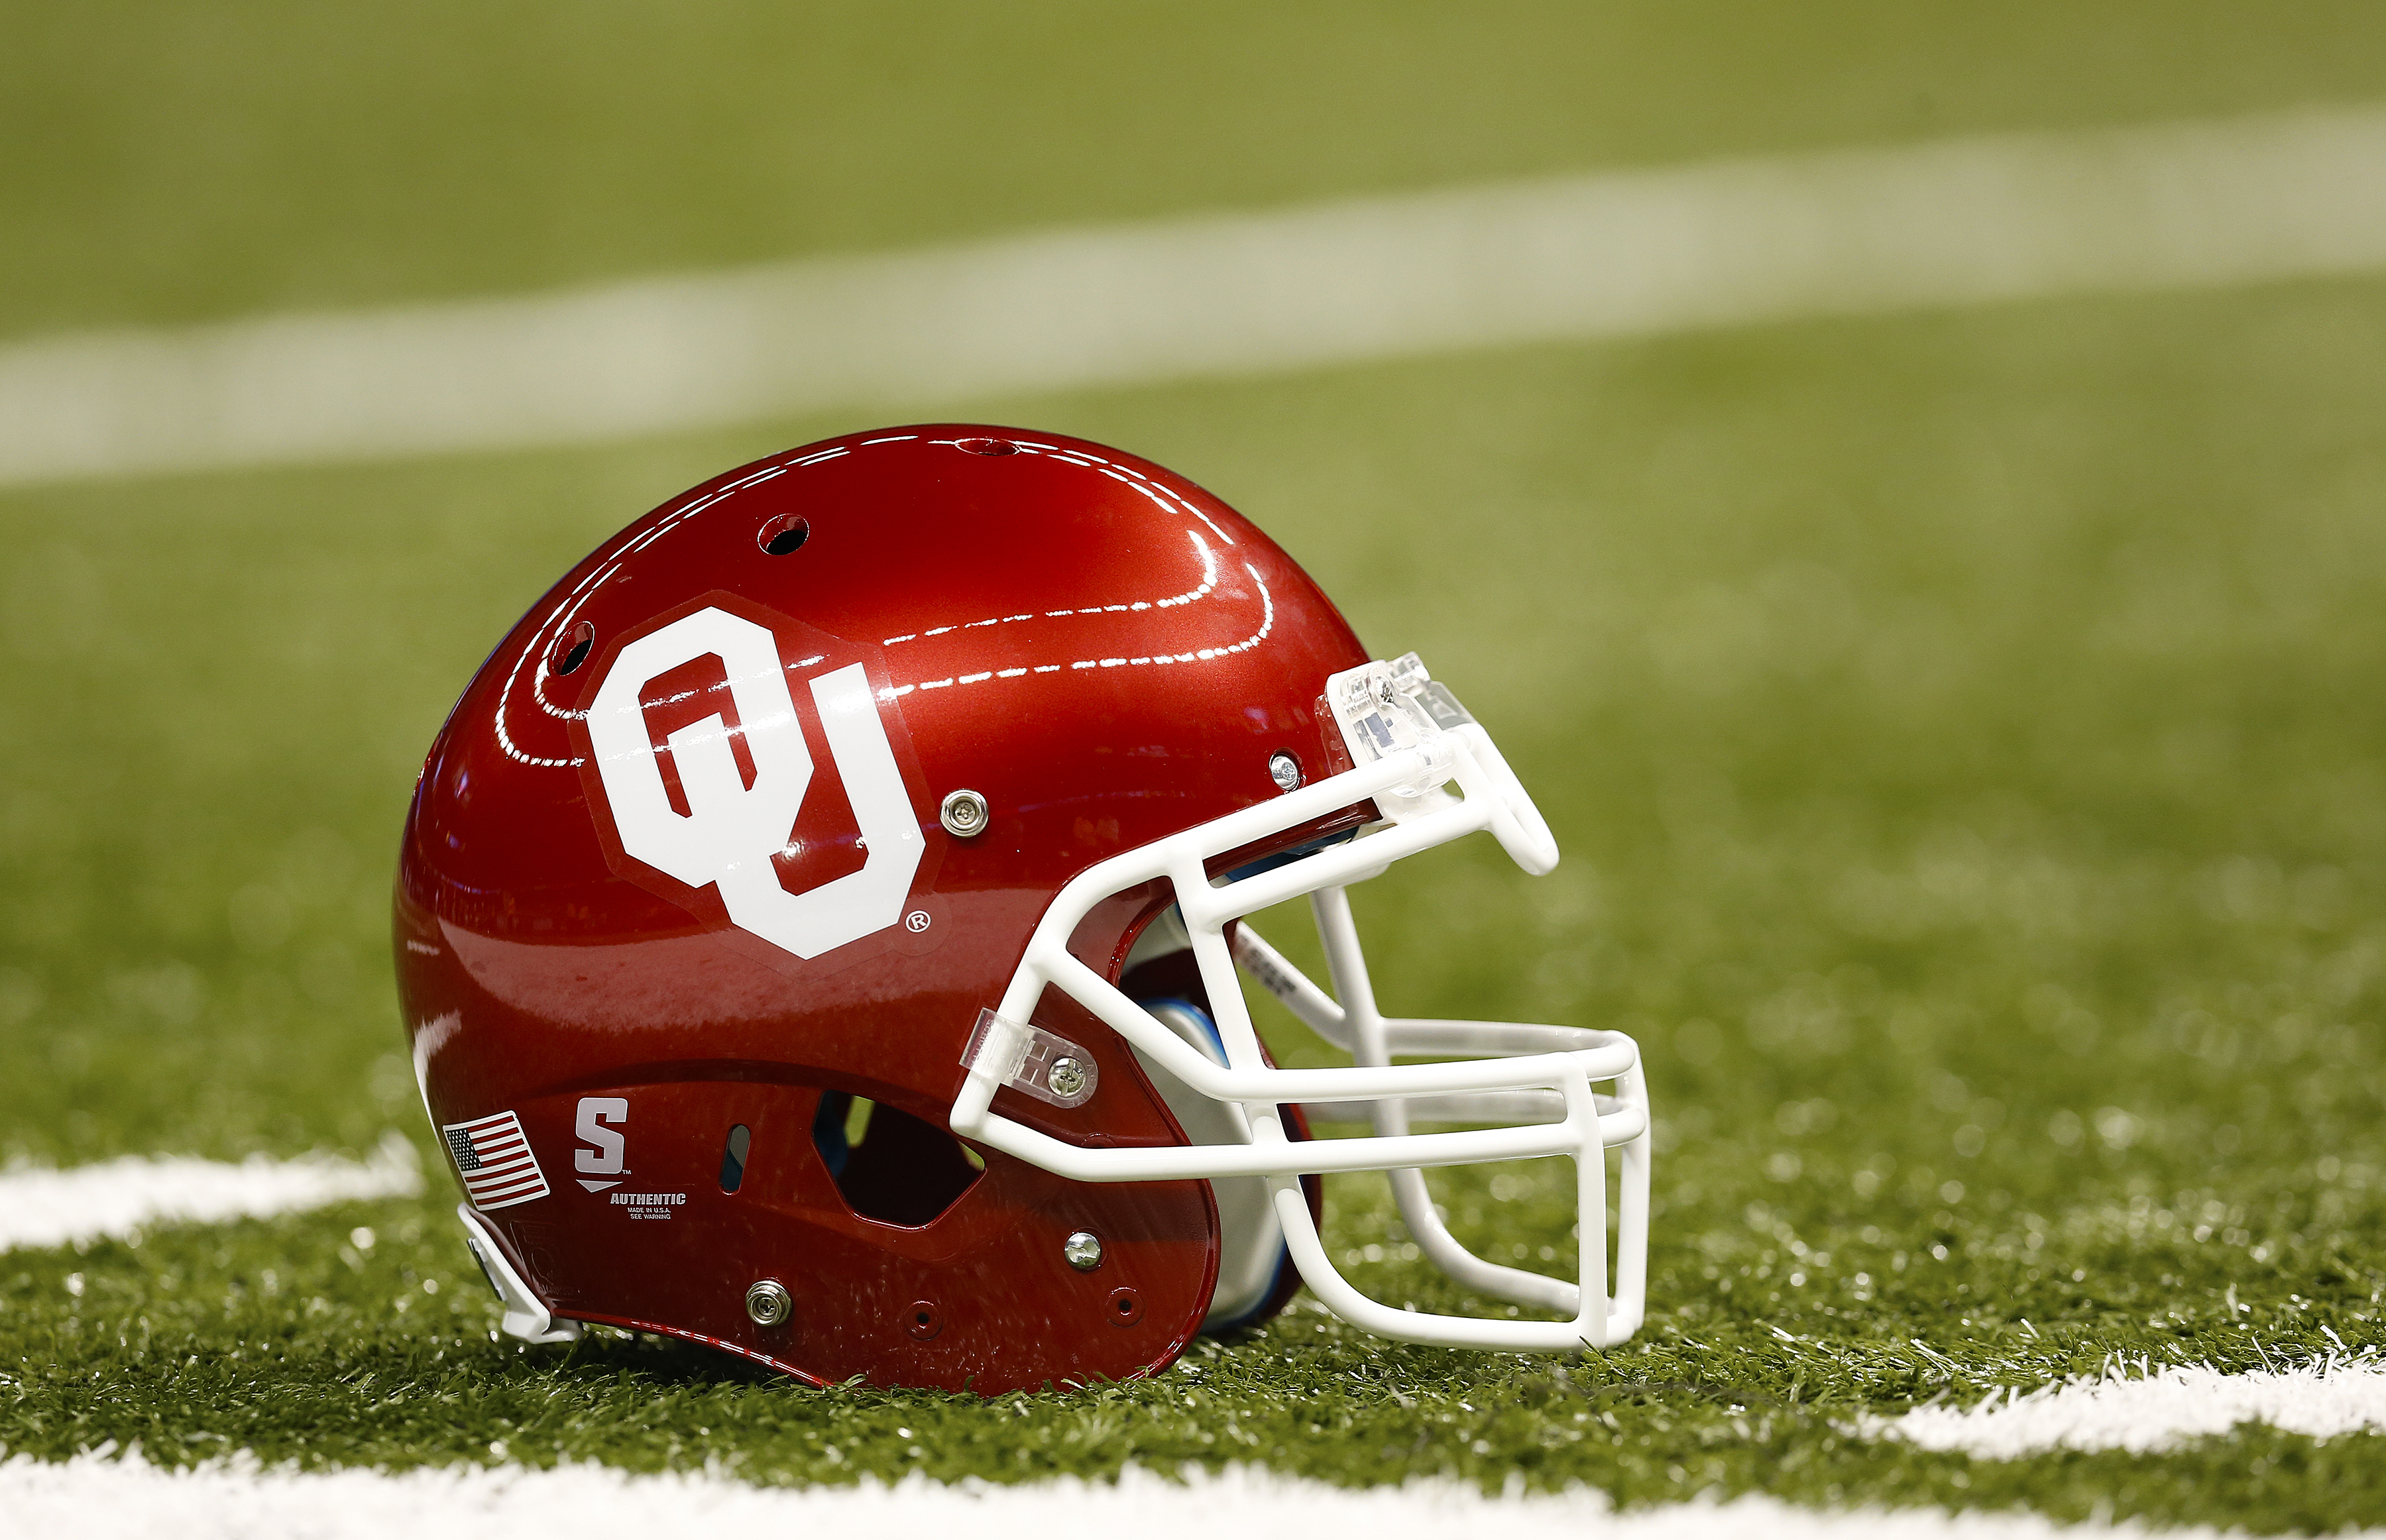 University of Oklahoma Sooners helmet is seen on the field a game against the University of Alabama Crimson Tide in New Orleans on Jan. 2, 2014. (Aaron M. Sprecher—AP)